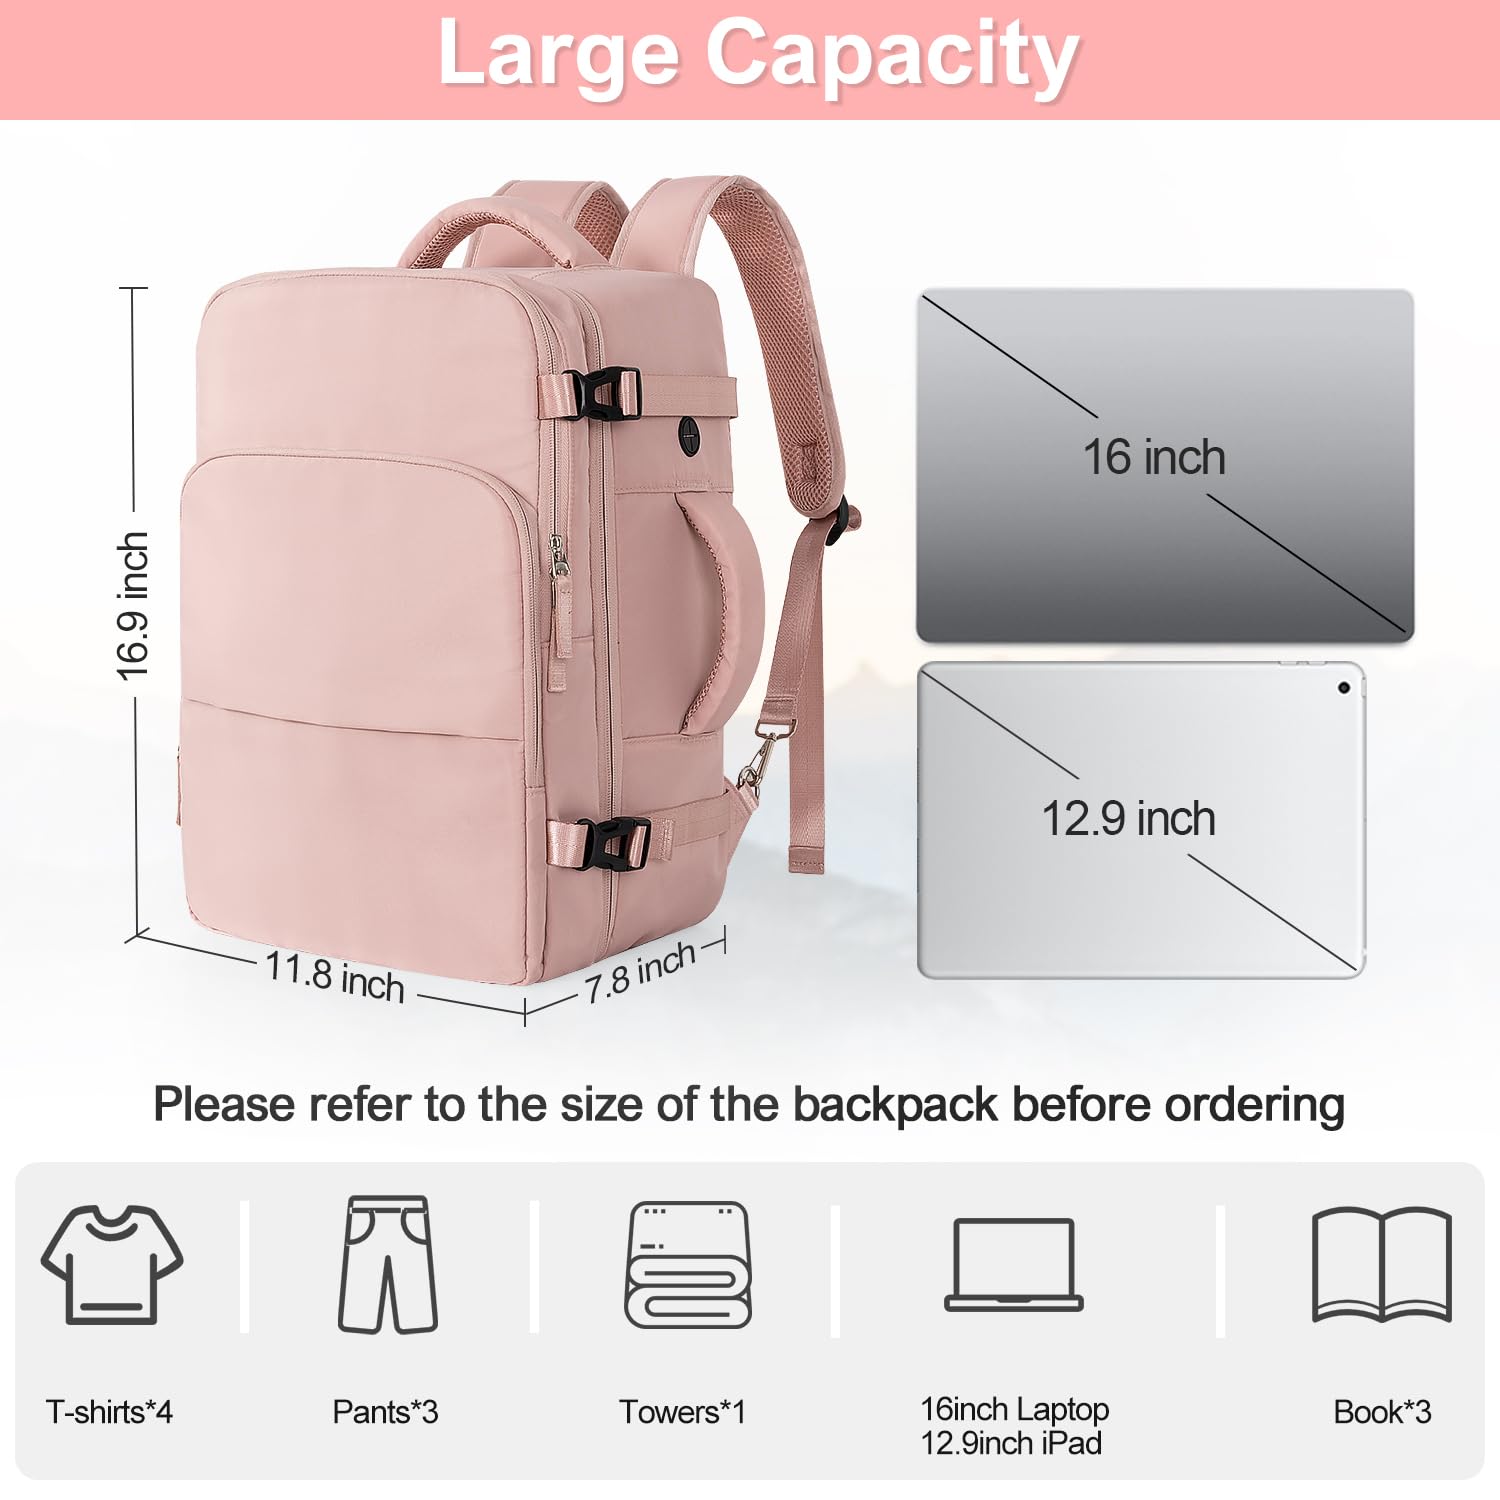 Sinaliy Travel Backpack for Women, Flight Approved Backpack, College Backpack Bag, Casual Daypack, Hiking Backpack, Waterproof Carry On Backpack Business Backpack